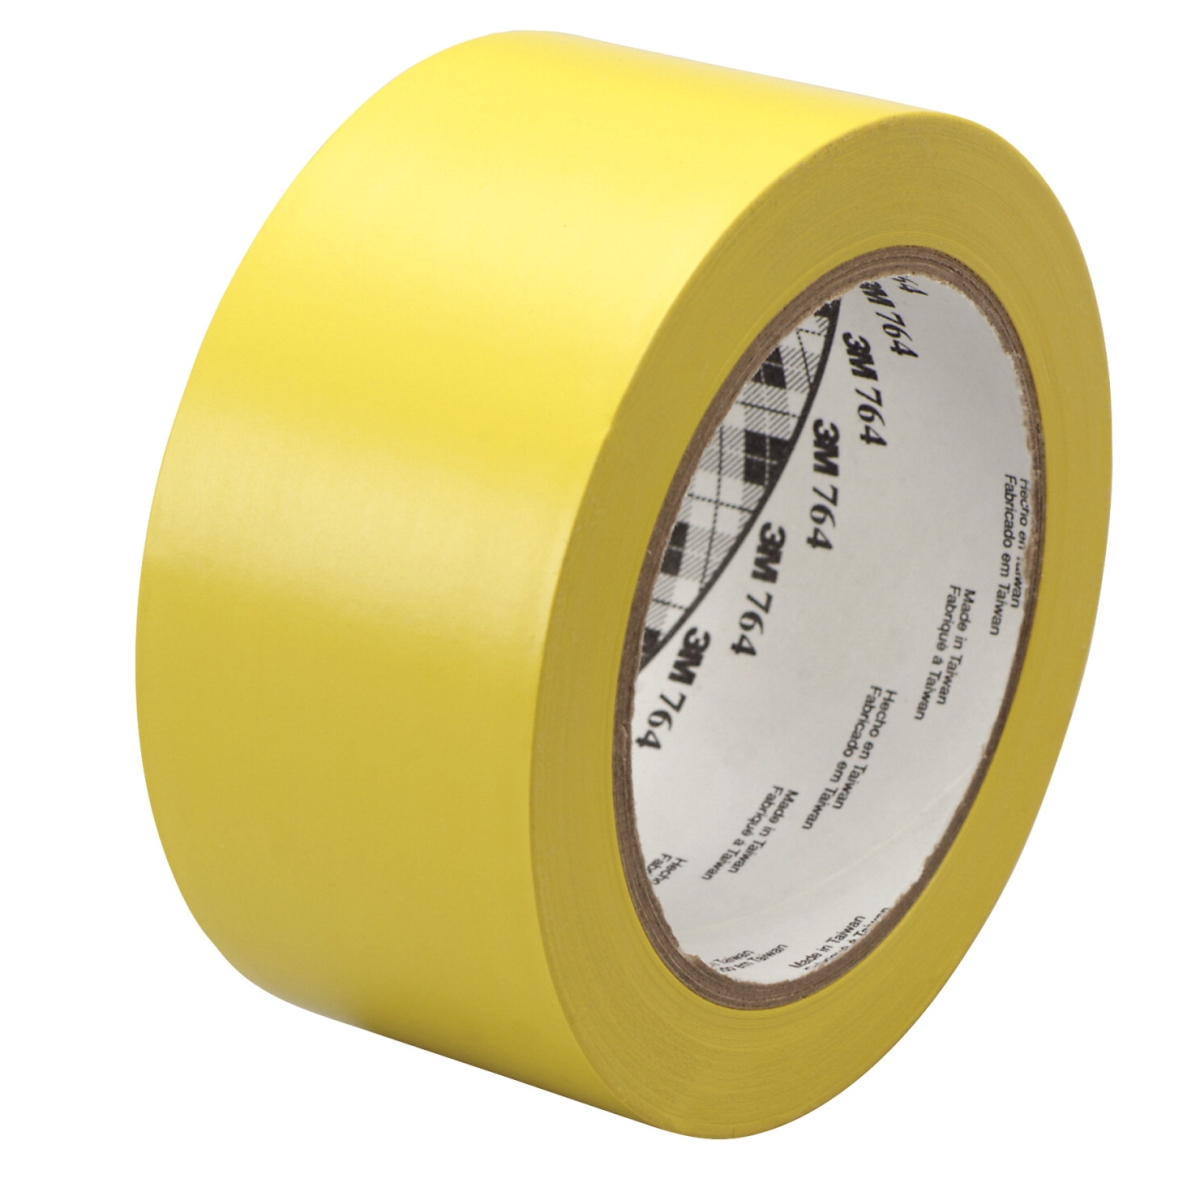 General Purpose Wear Resistant Floor Marking Tape Roll, 2 In. X 36 Yard, Vinyl - Yellow